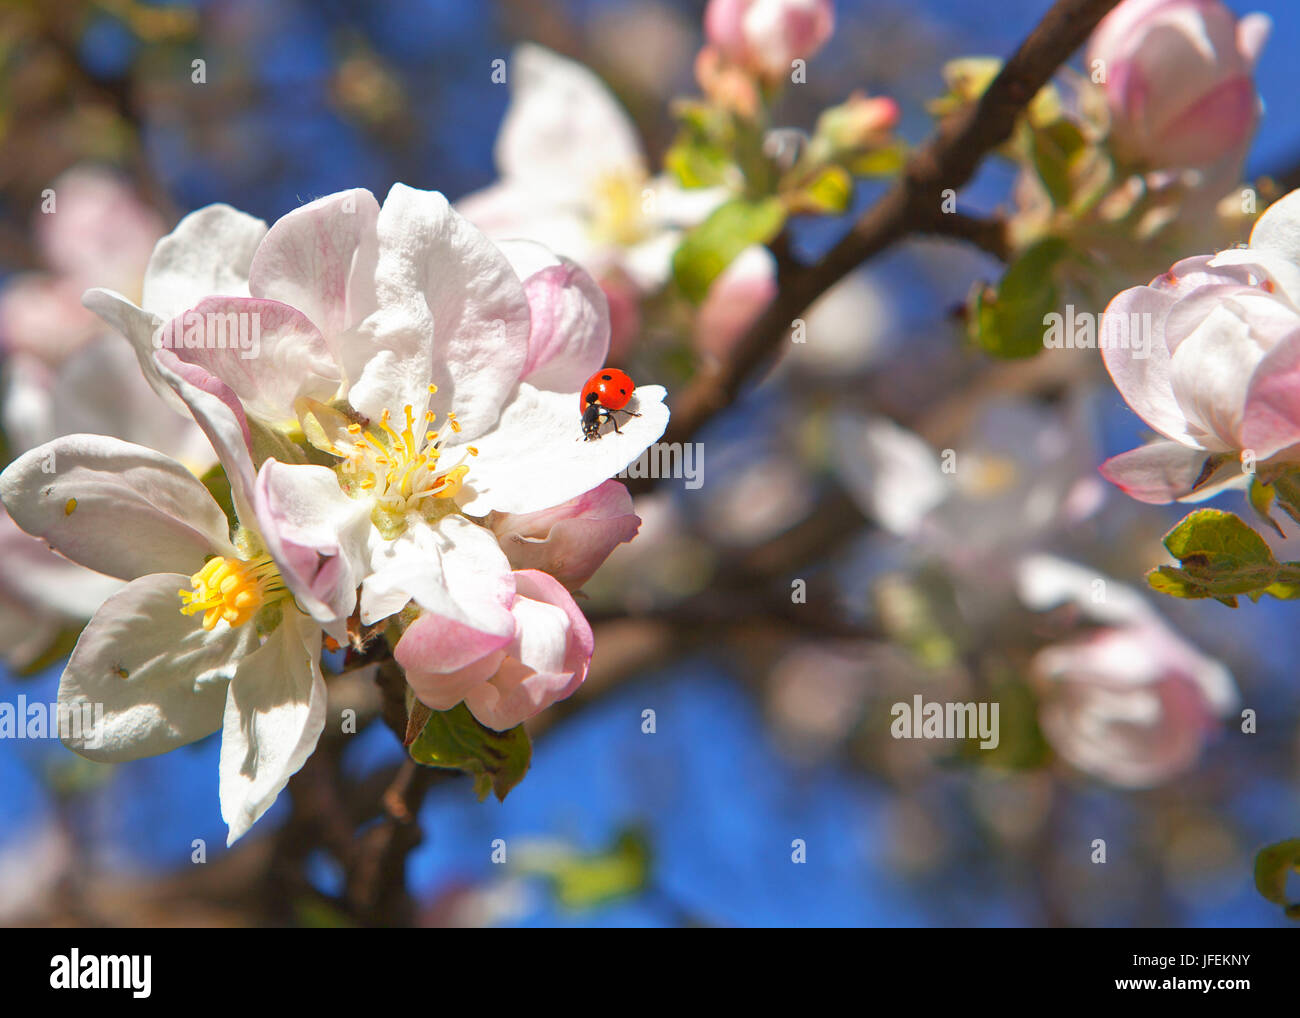 Ladybird on apple blossoms Stock Photo